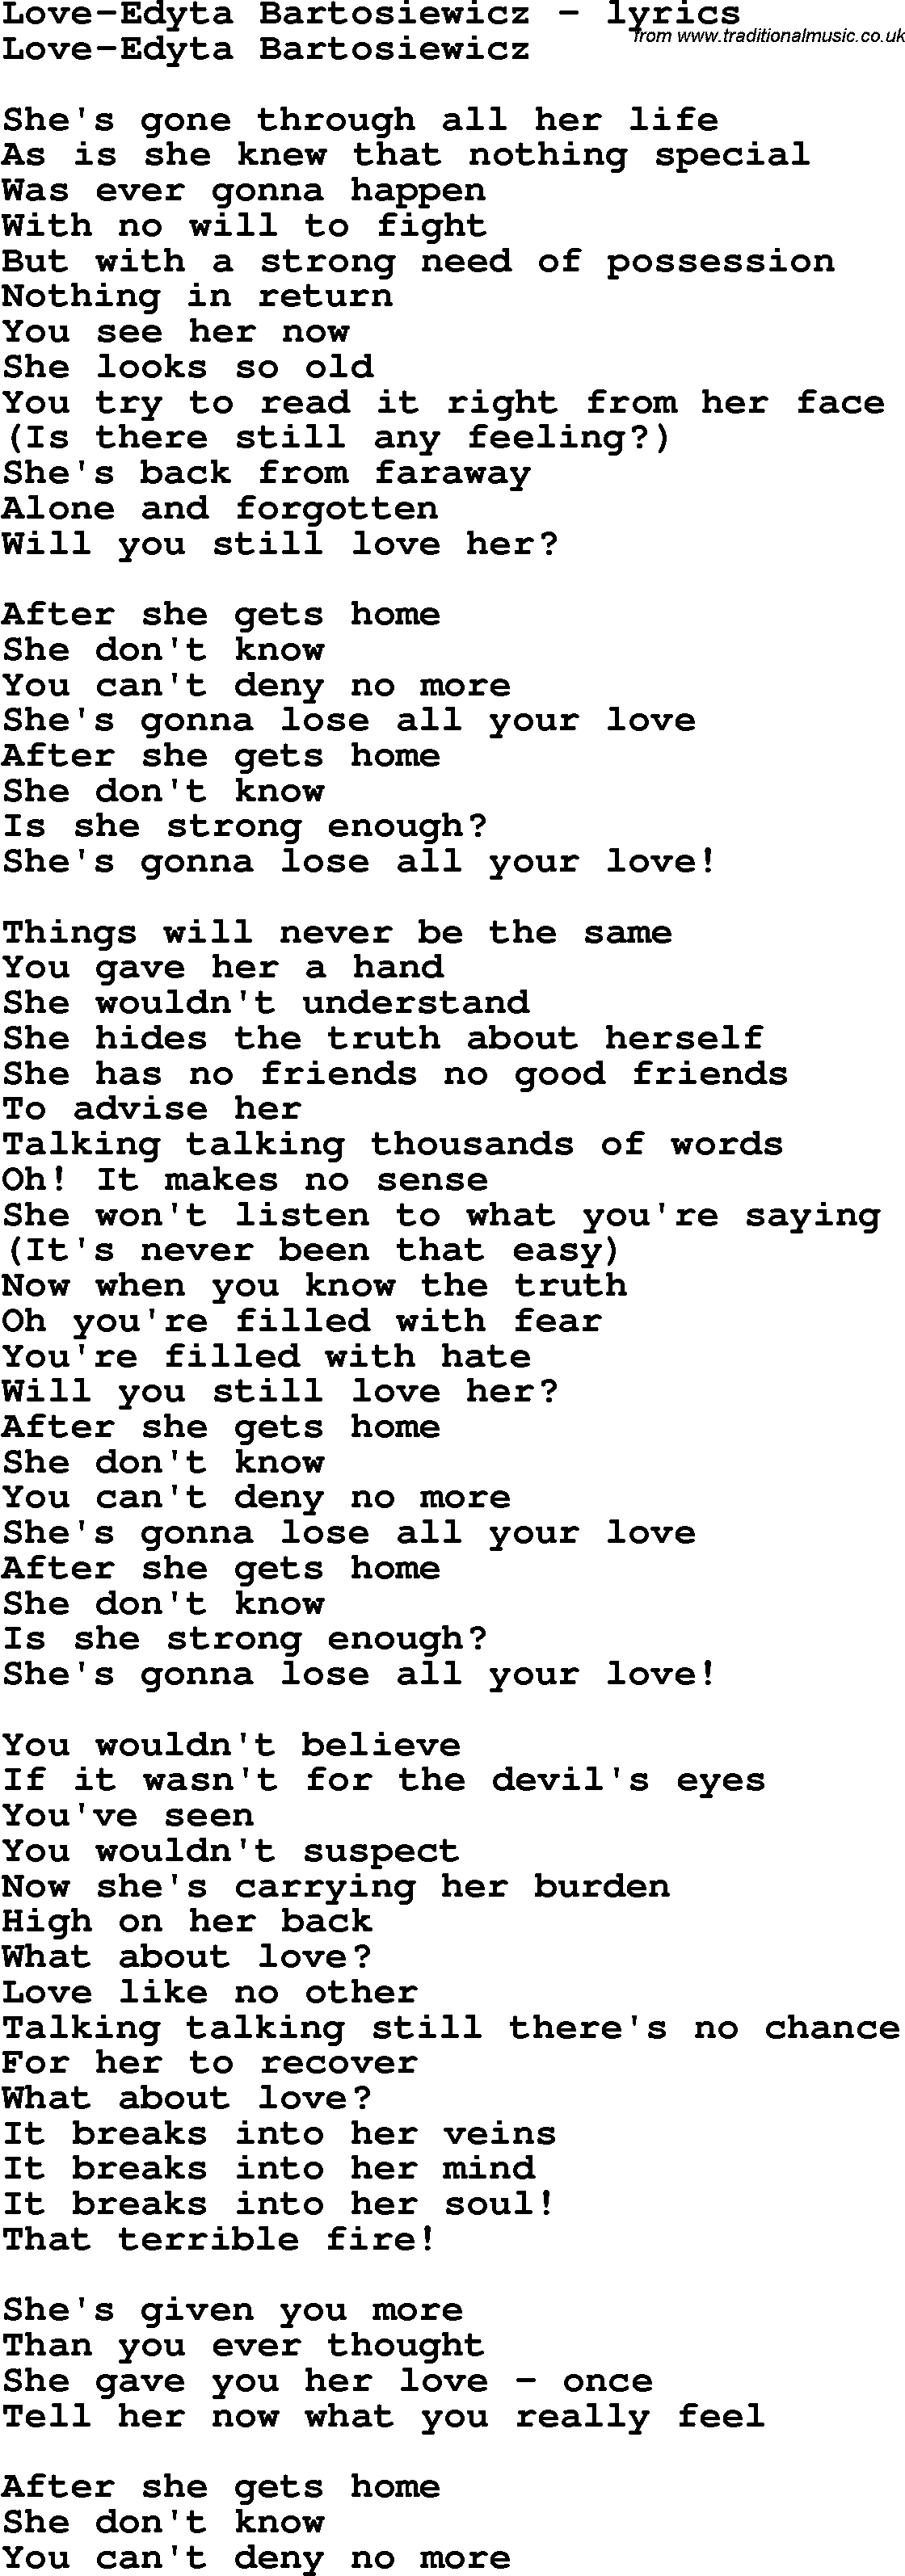 Love Song Lyrics for: Love-Edyta Bartosiewicz